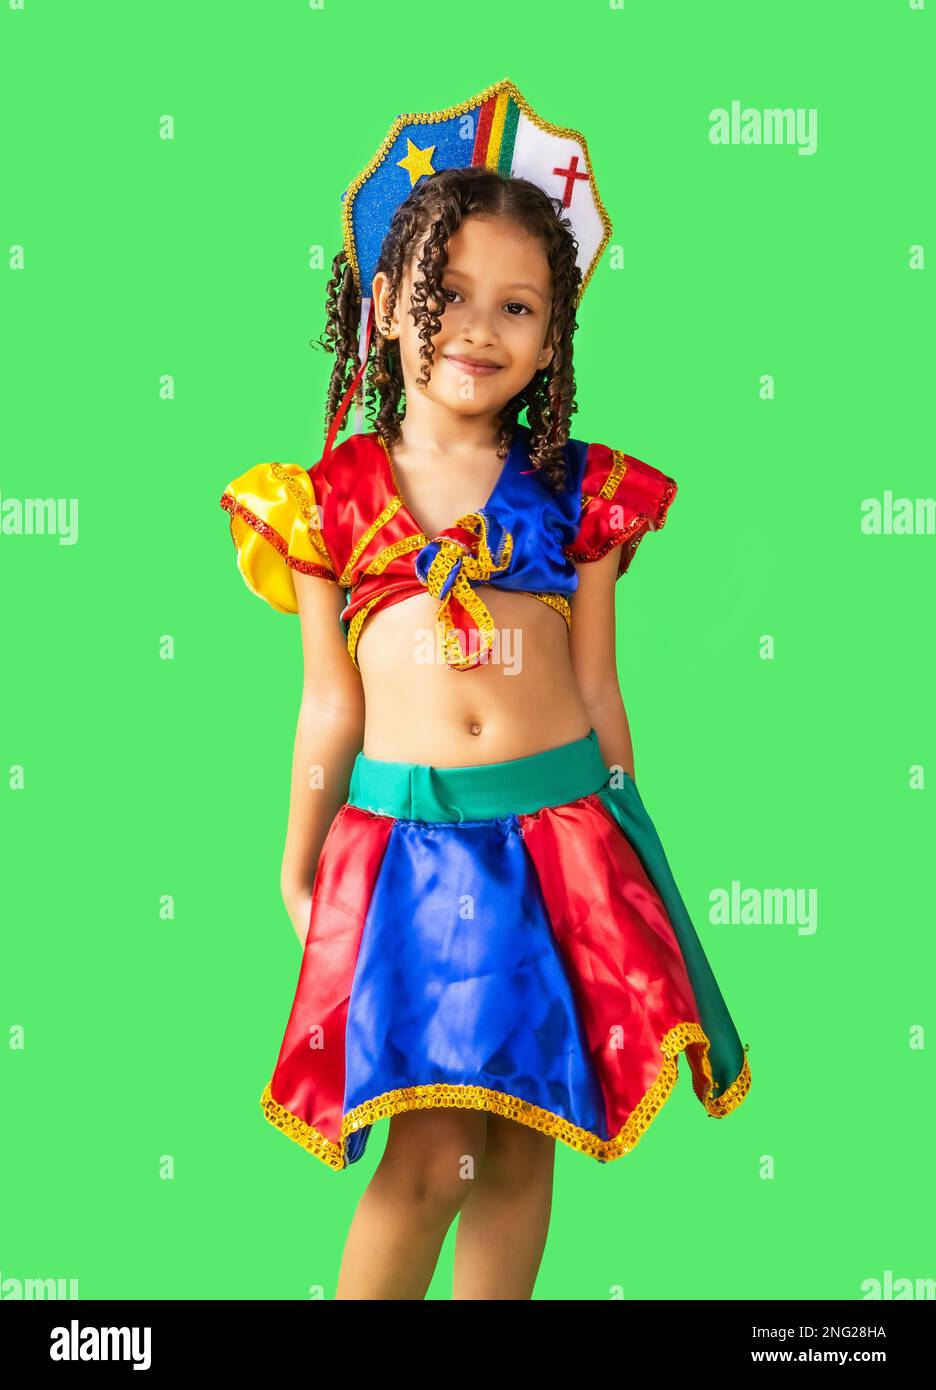 Disfraz de niña carnaval fotografías e imágenes de alta resolución - Alamy